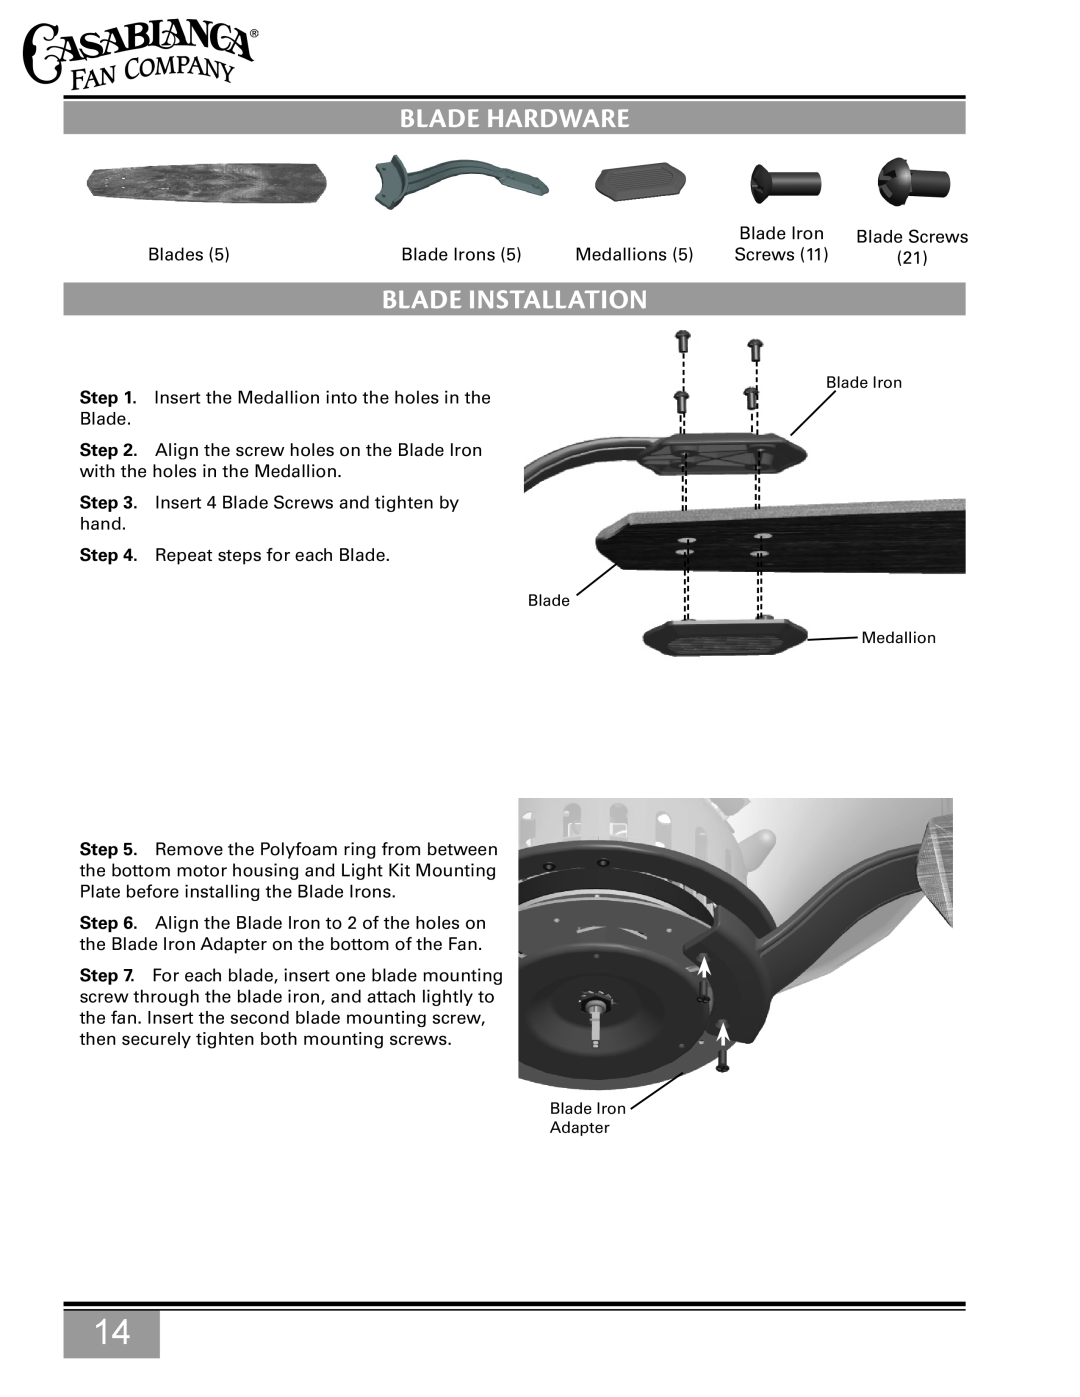 Casablanca Fan Company C15G624L owner manual Blade Hardware, Blade Installation, Blade Medallion, Blade Iron Adapter 